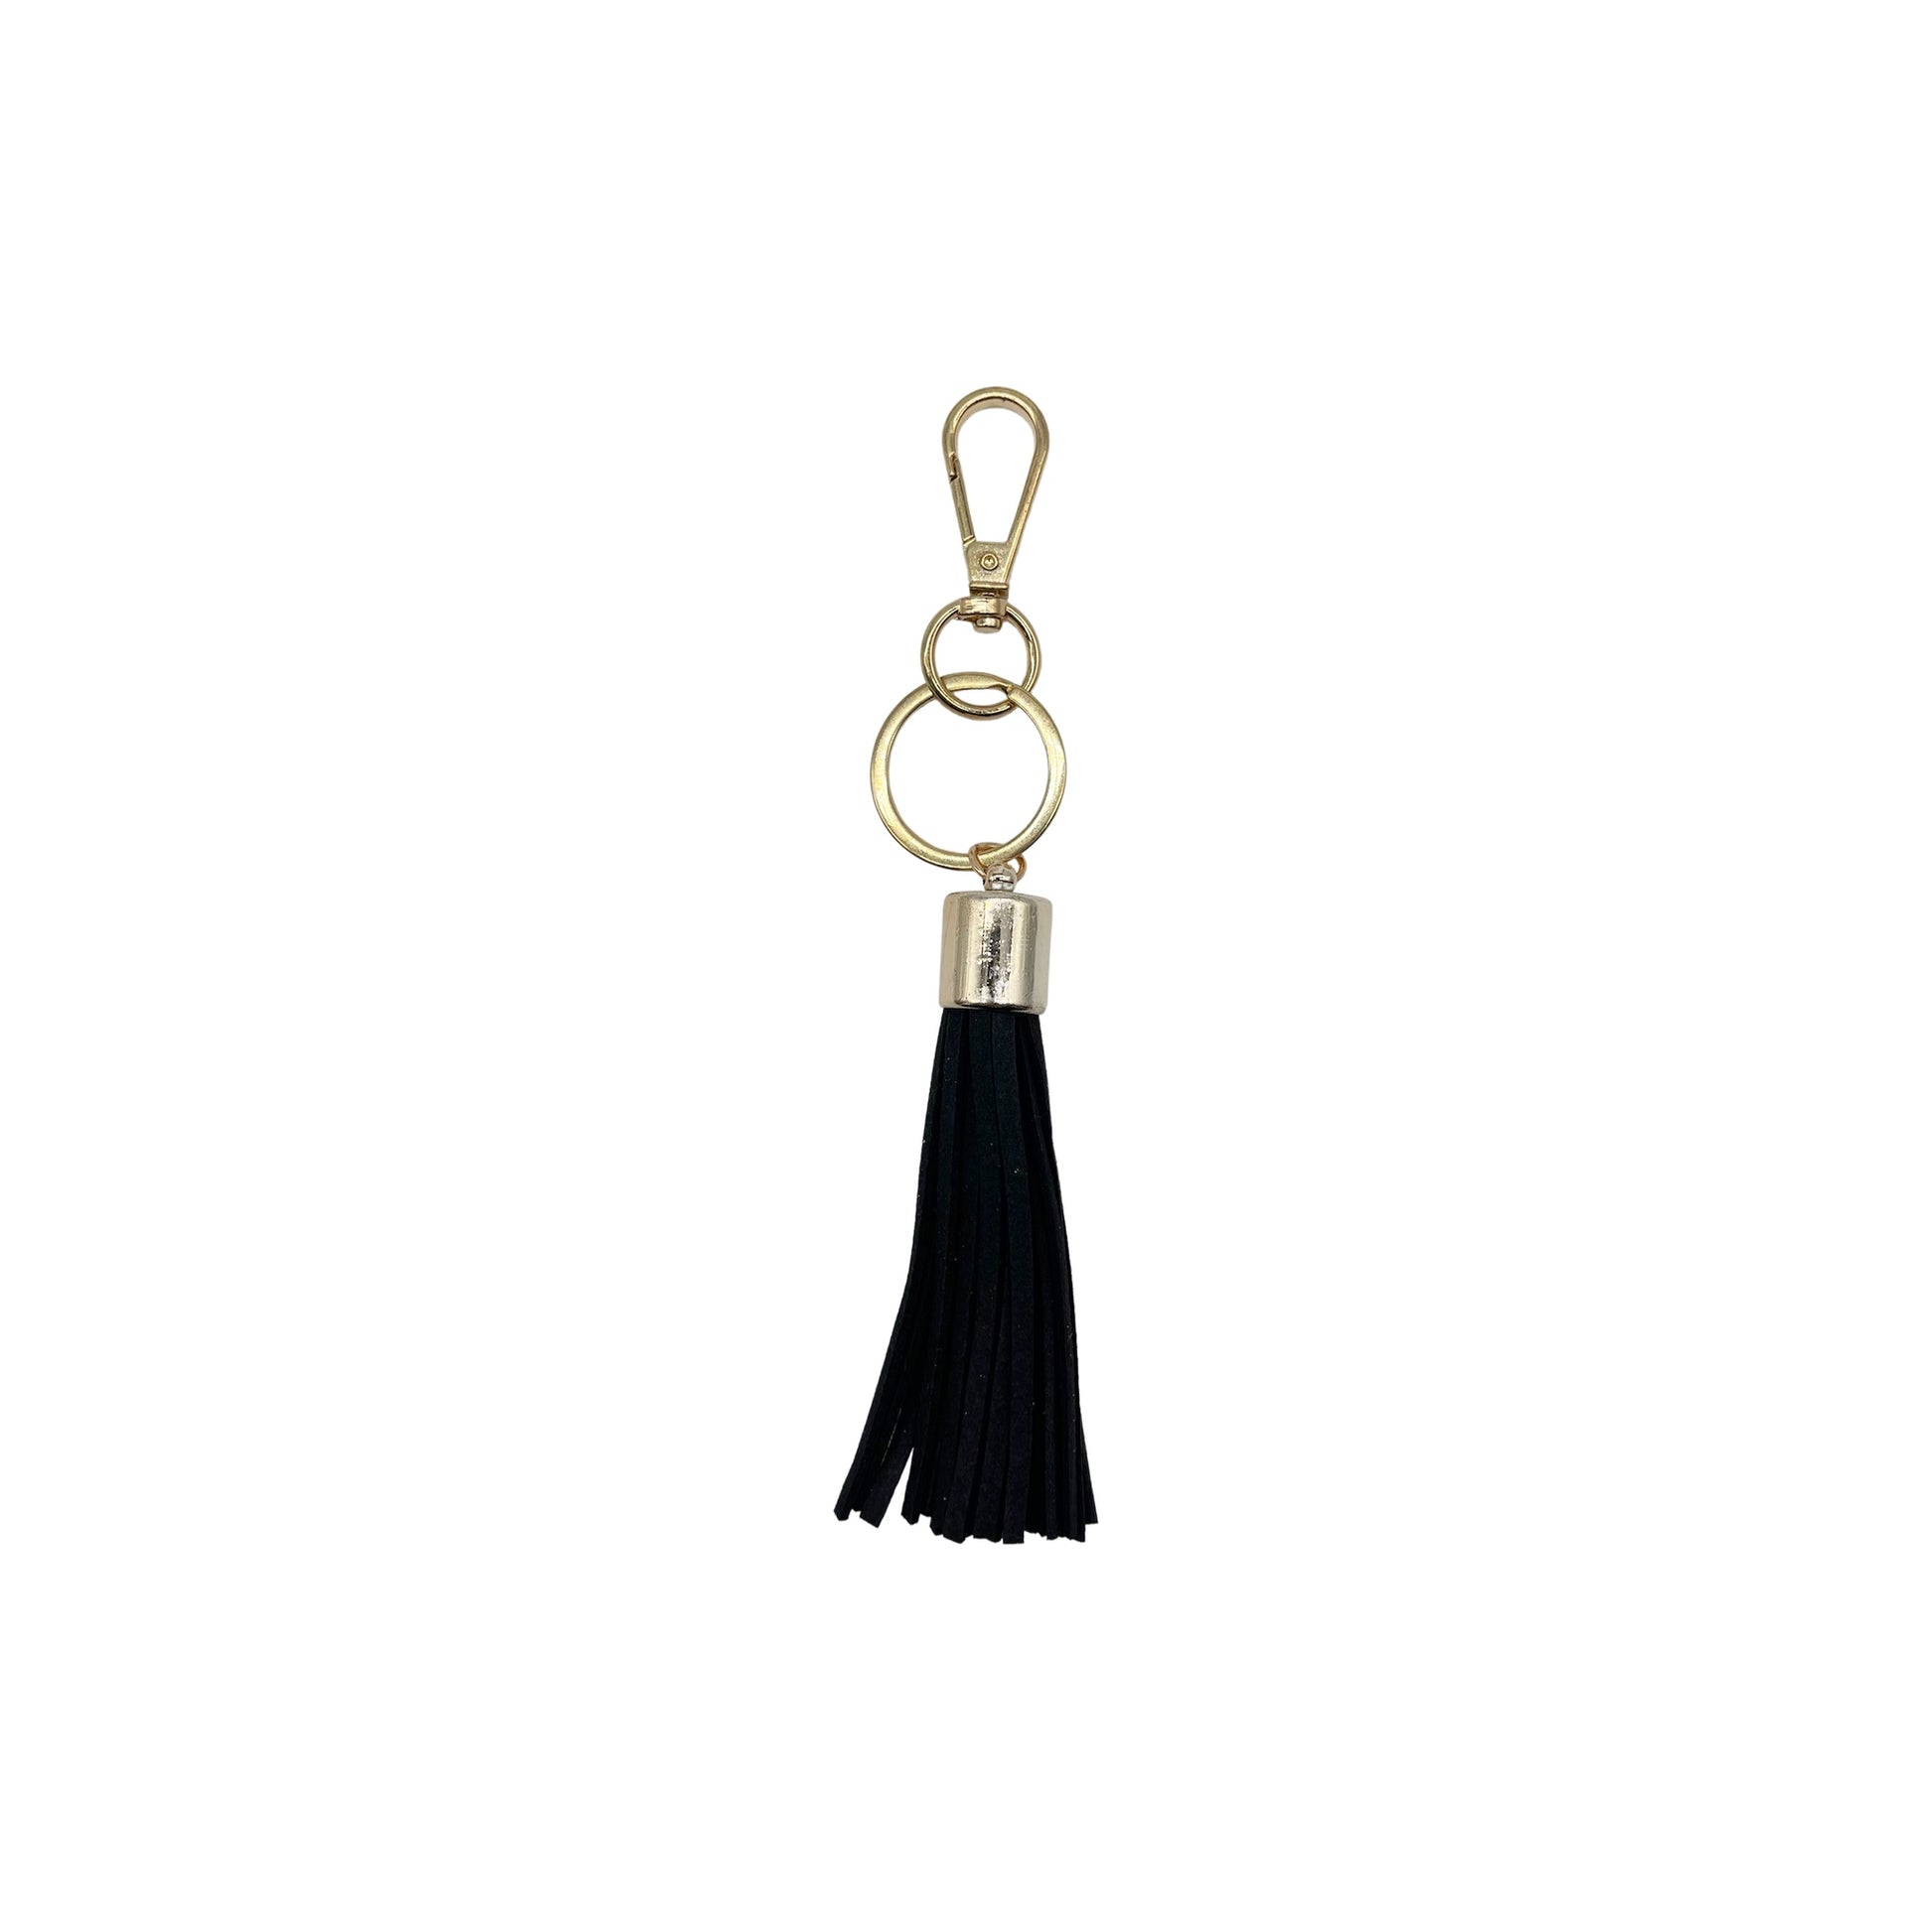 Black faux Suede Cord tassel keychain assortment.